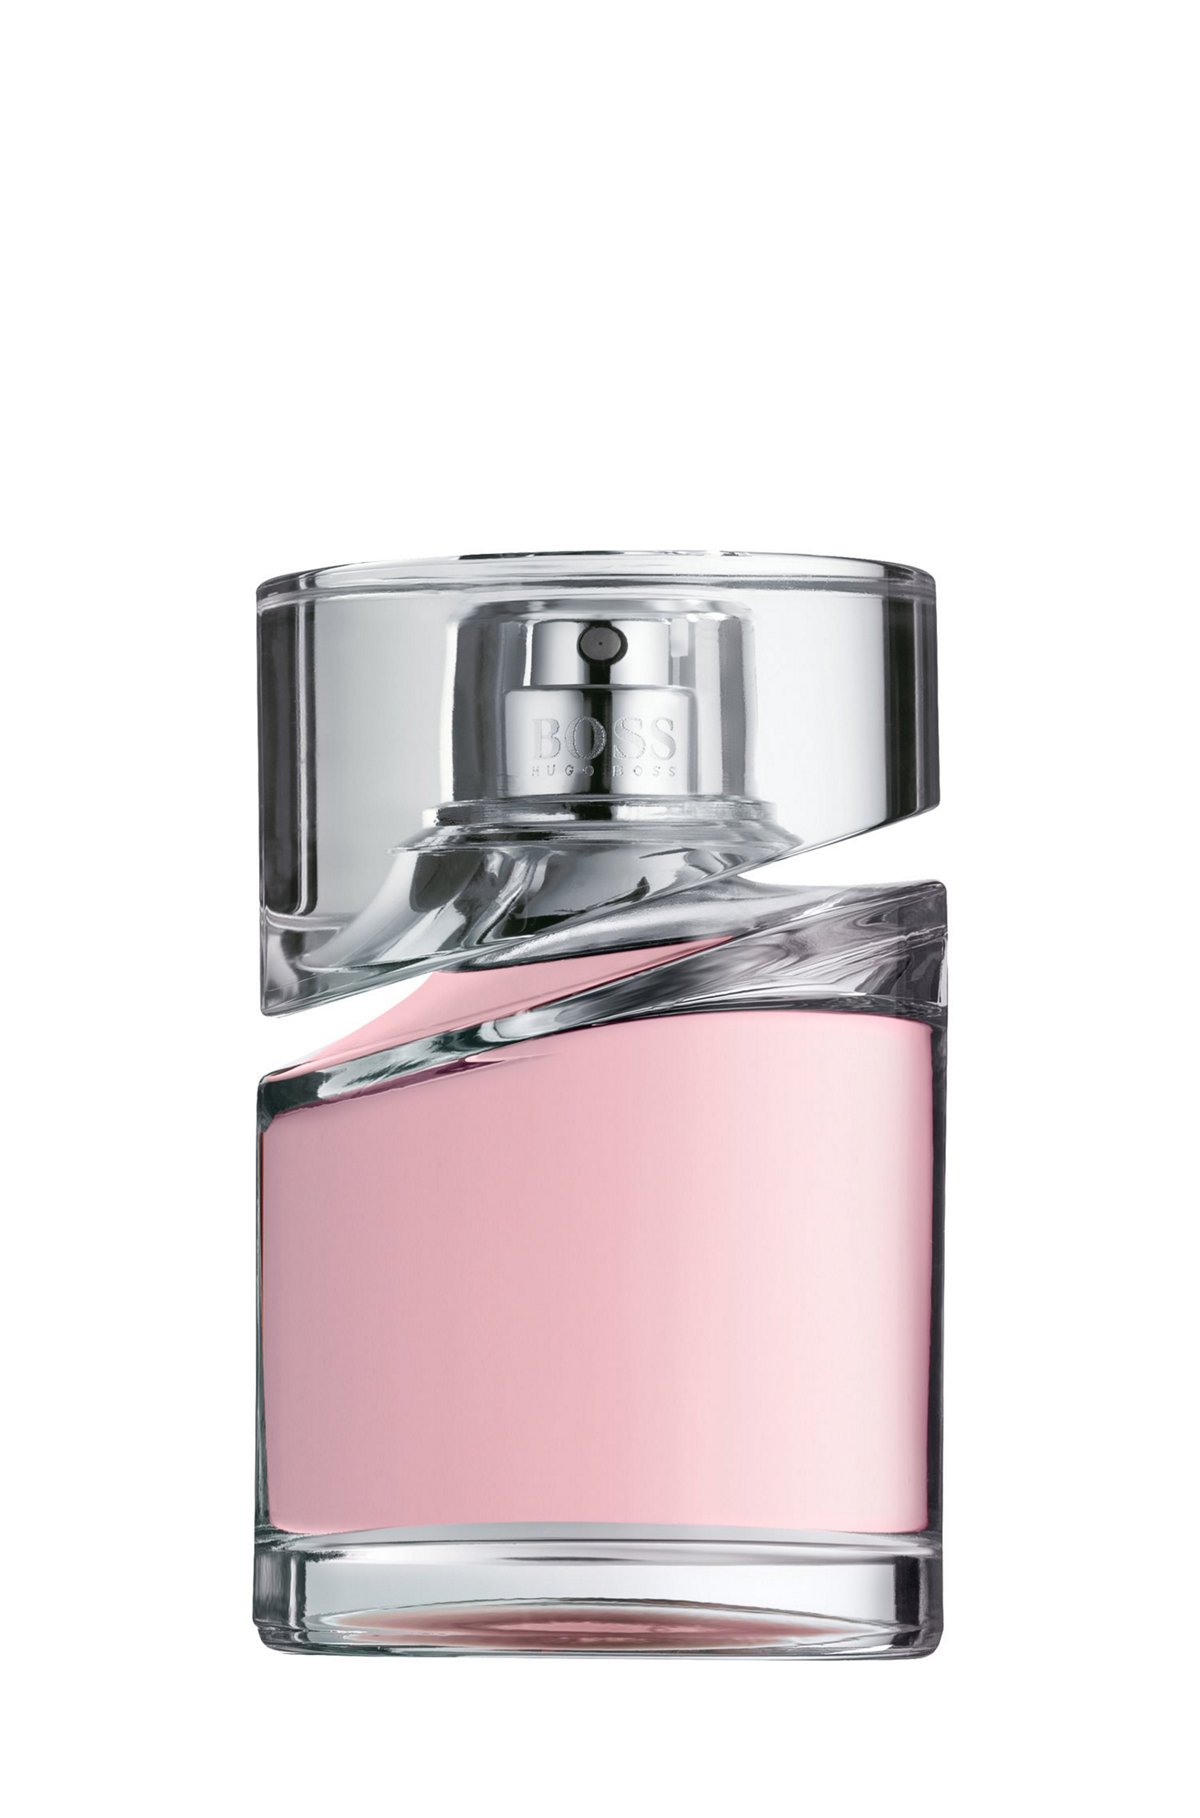 Eau de parfum Femme by BOSS, 75 ml, Assorted-Pre-Pack